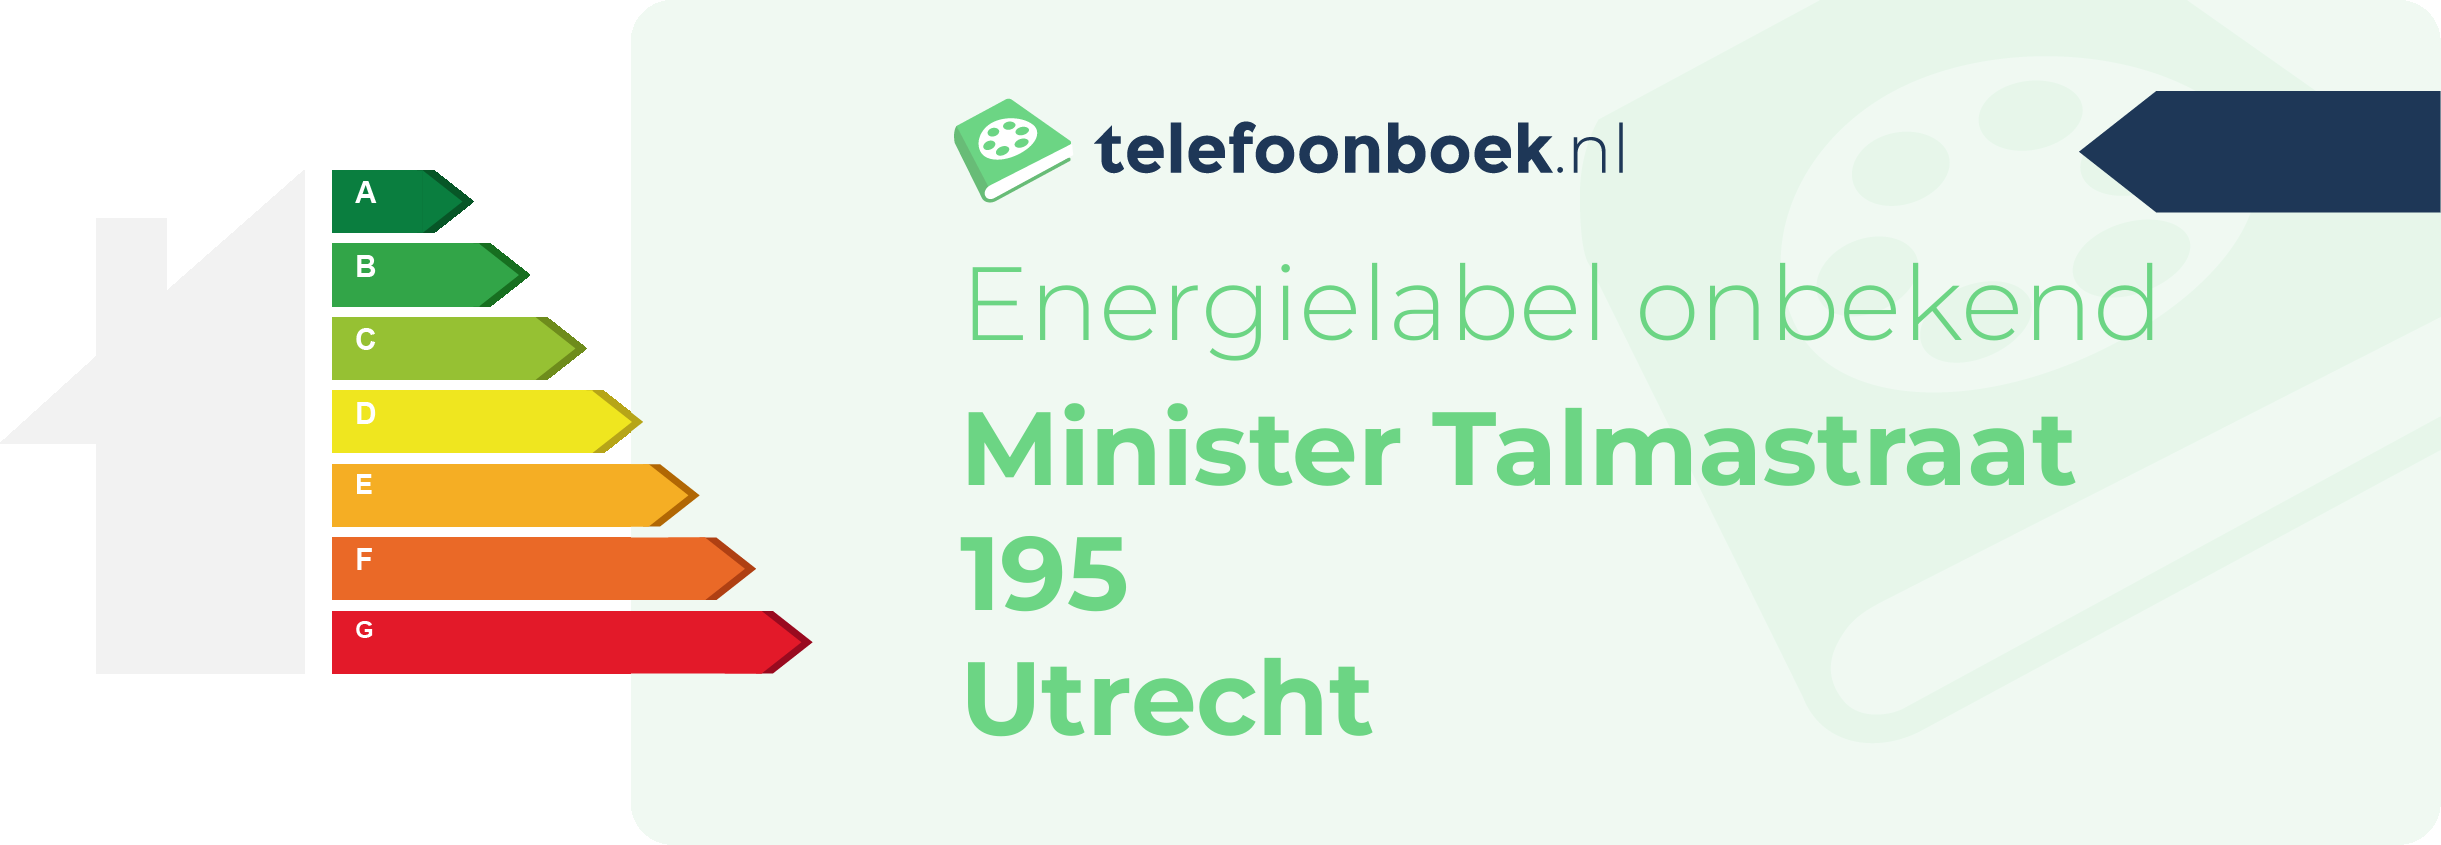 Energielabel Minister Talmastraat 195 Utrecht